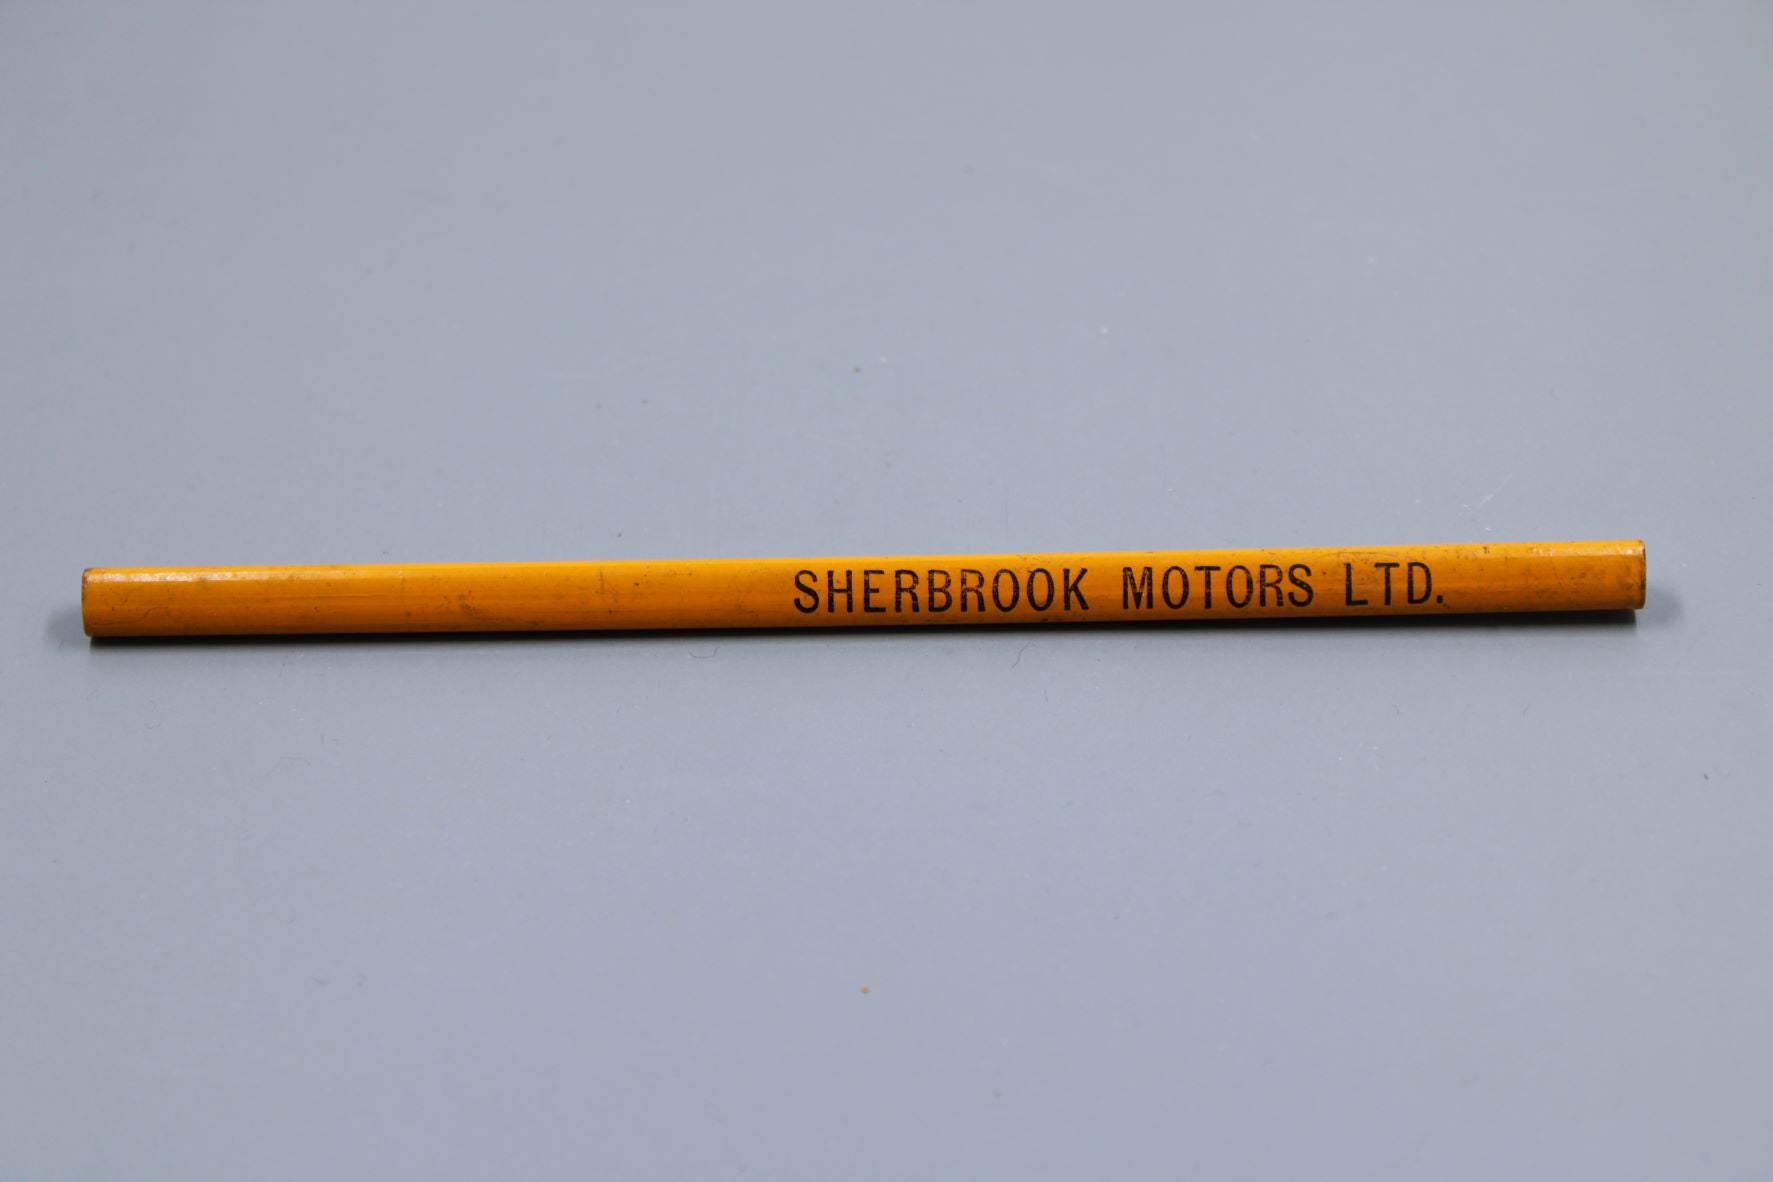 Vintage Advertising Pencil - Sherbrook Motors Ltd.